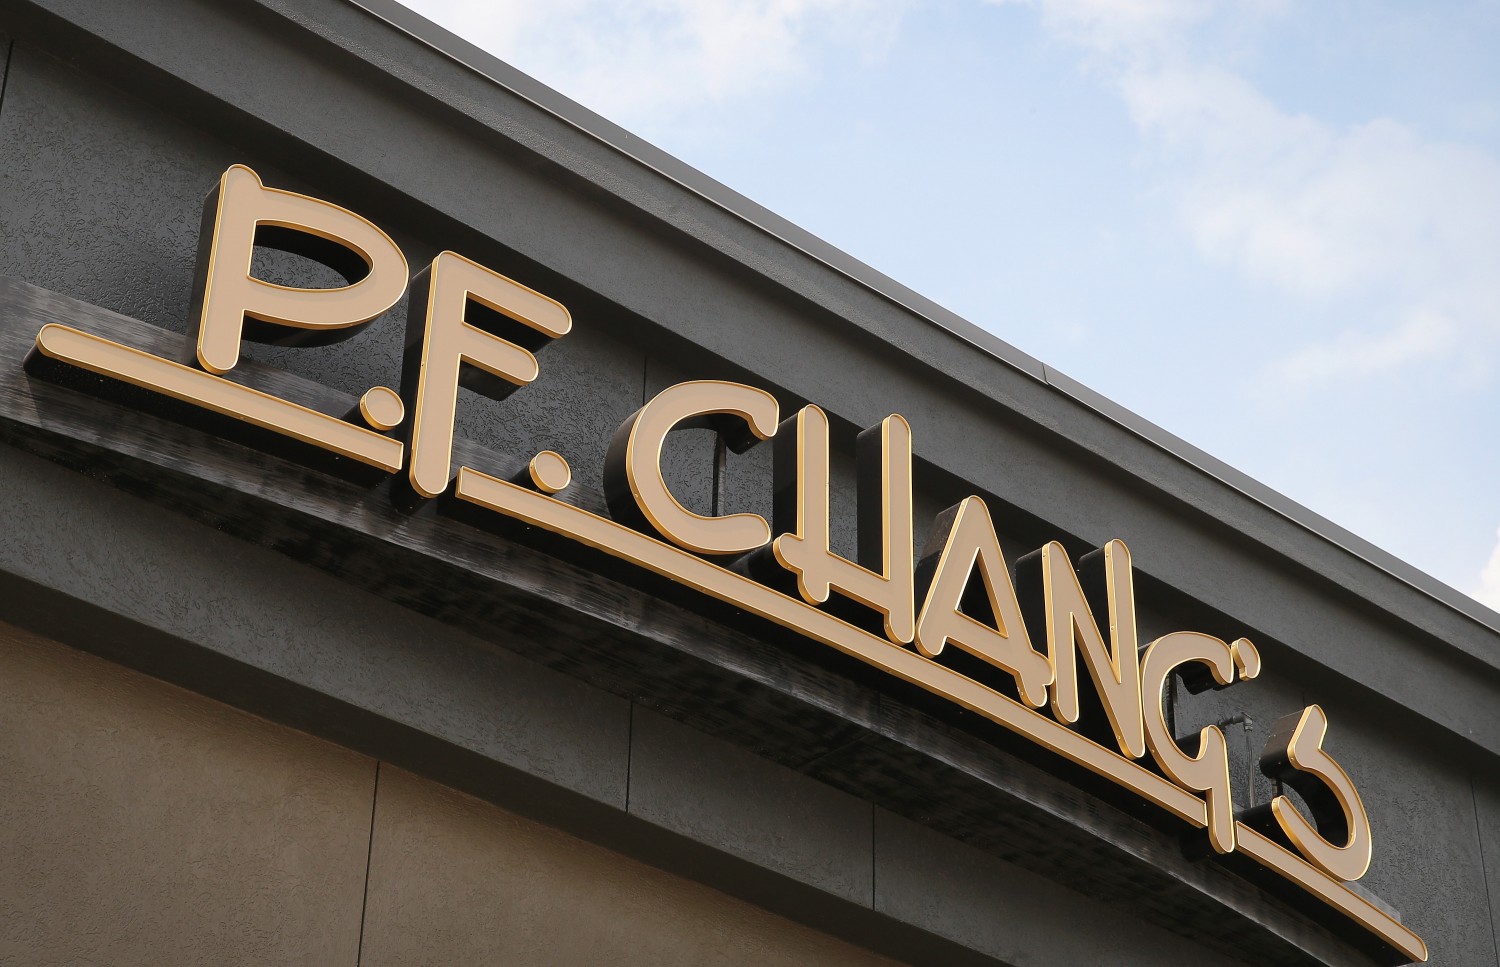 P.F. Chang's Restaurant Chain Announces Credit Card Security Breach